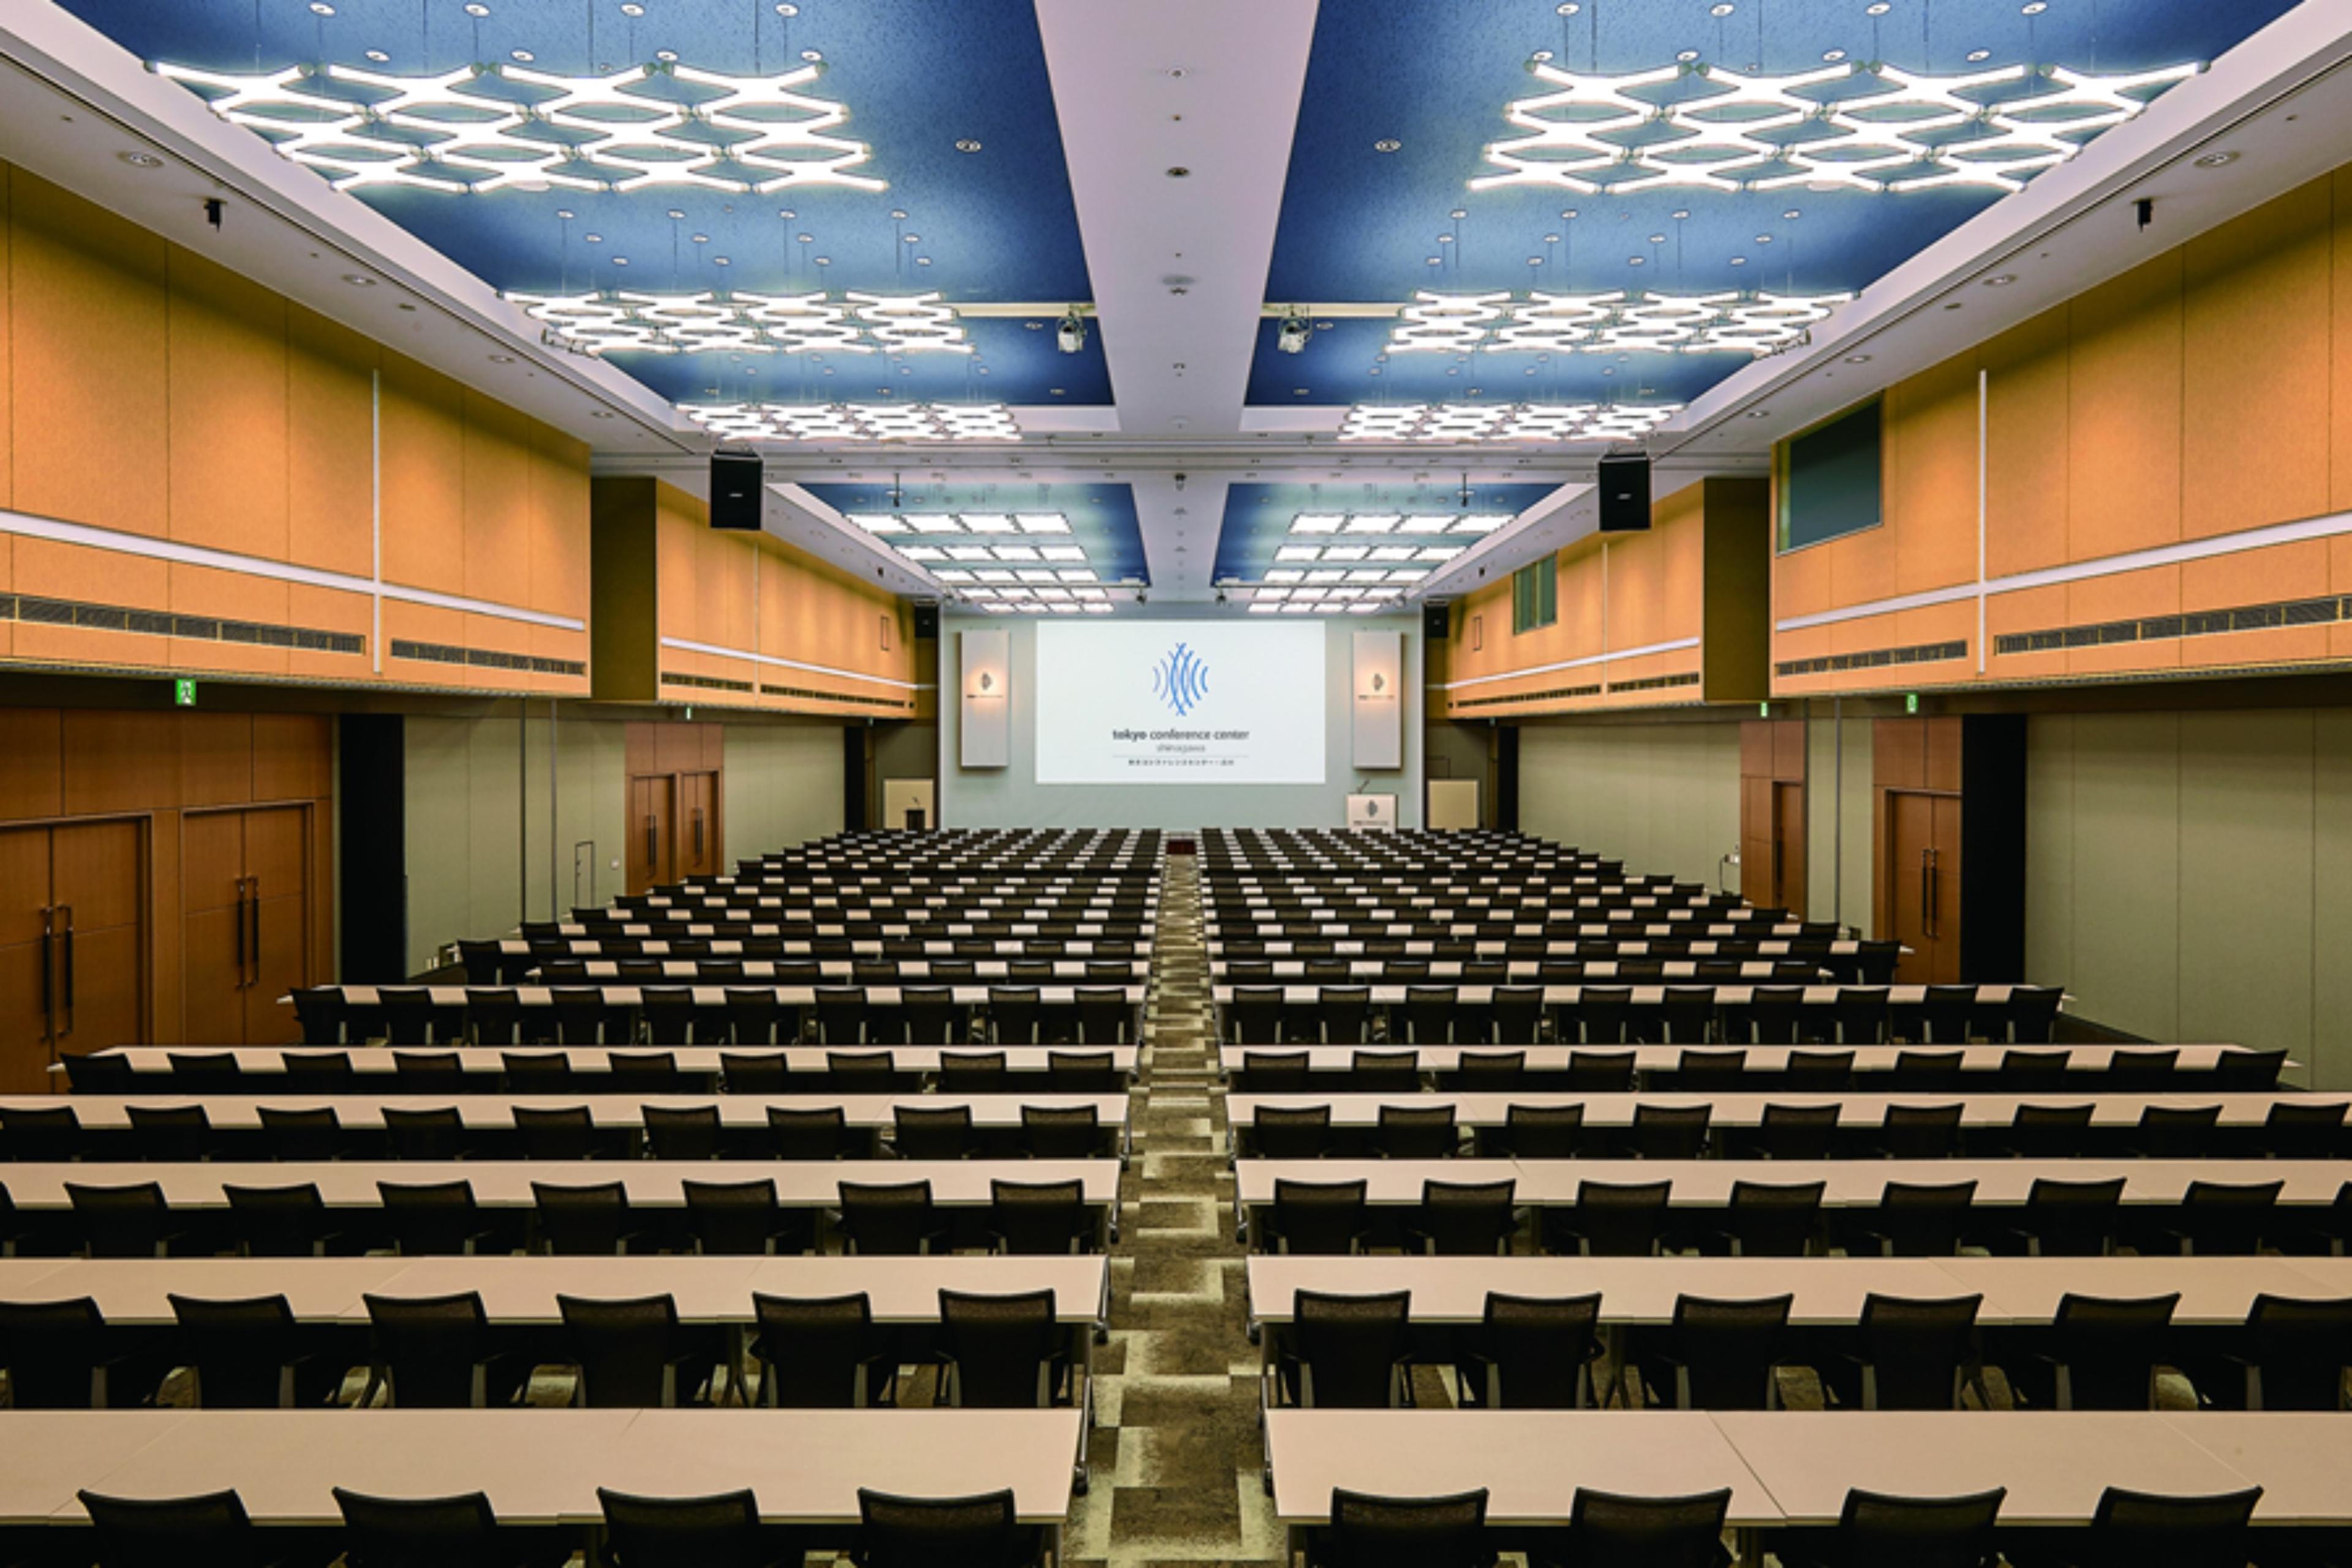 Tokyo Conference Center Shinagawa